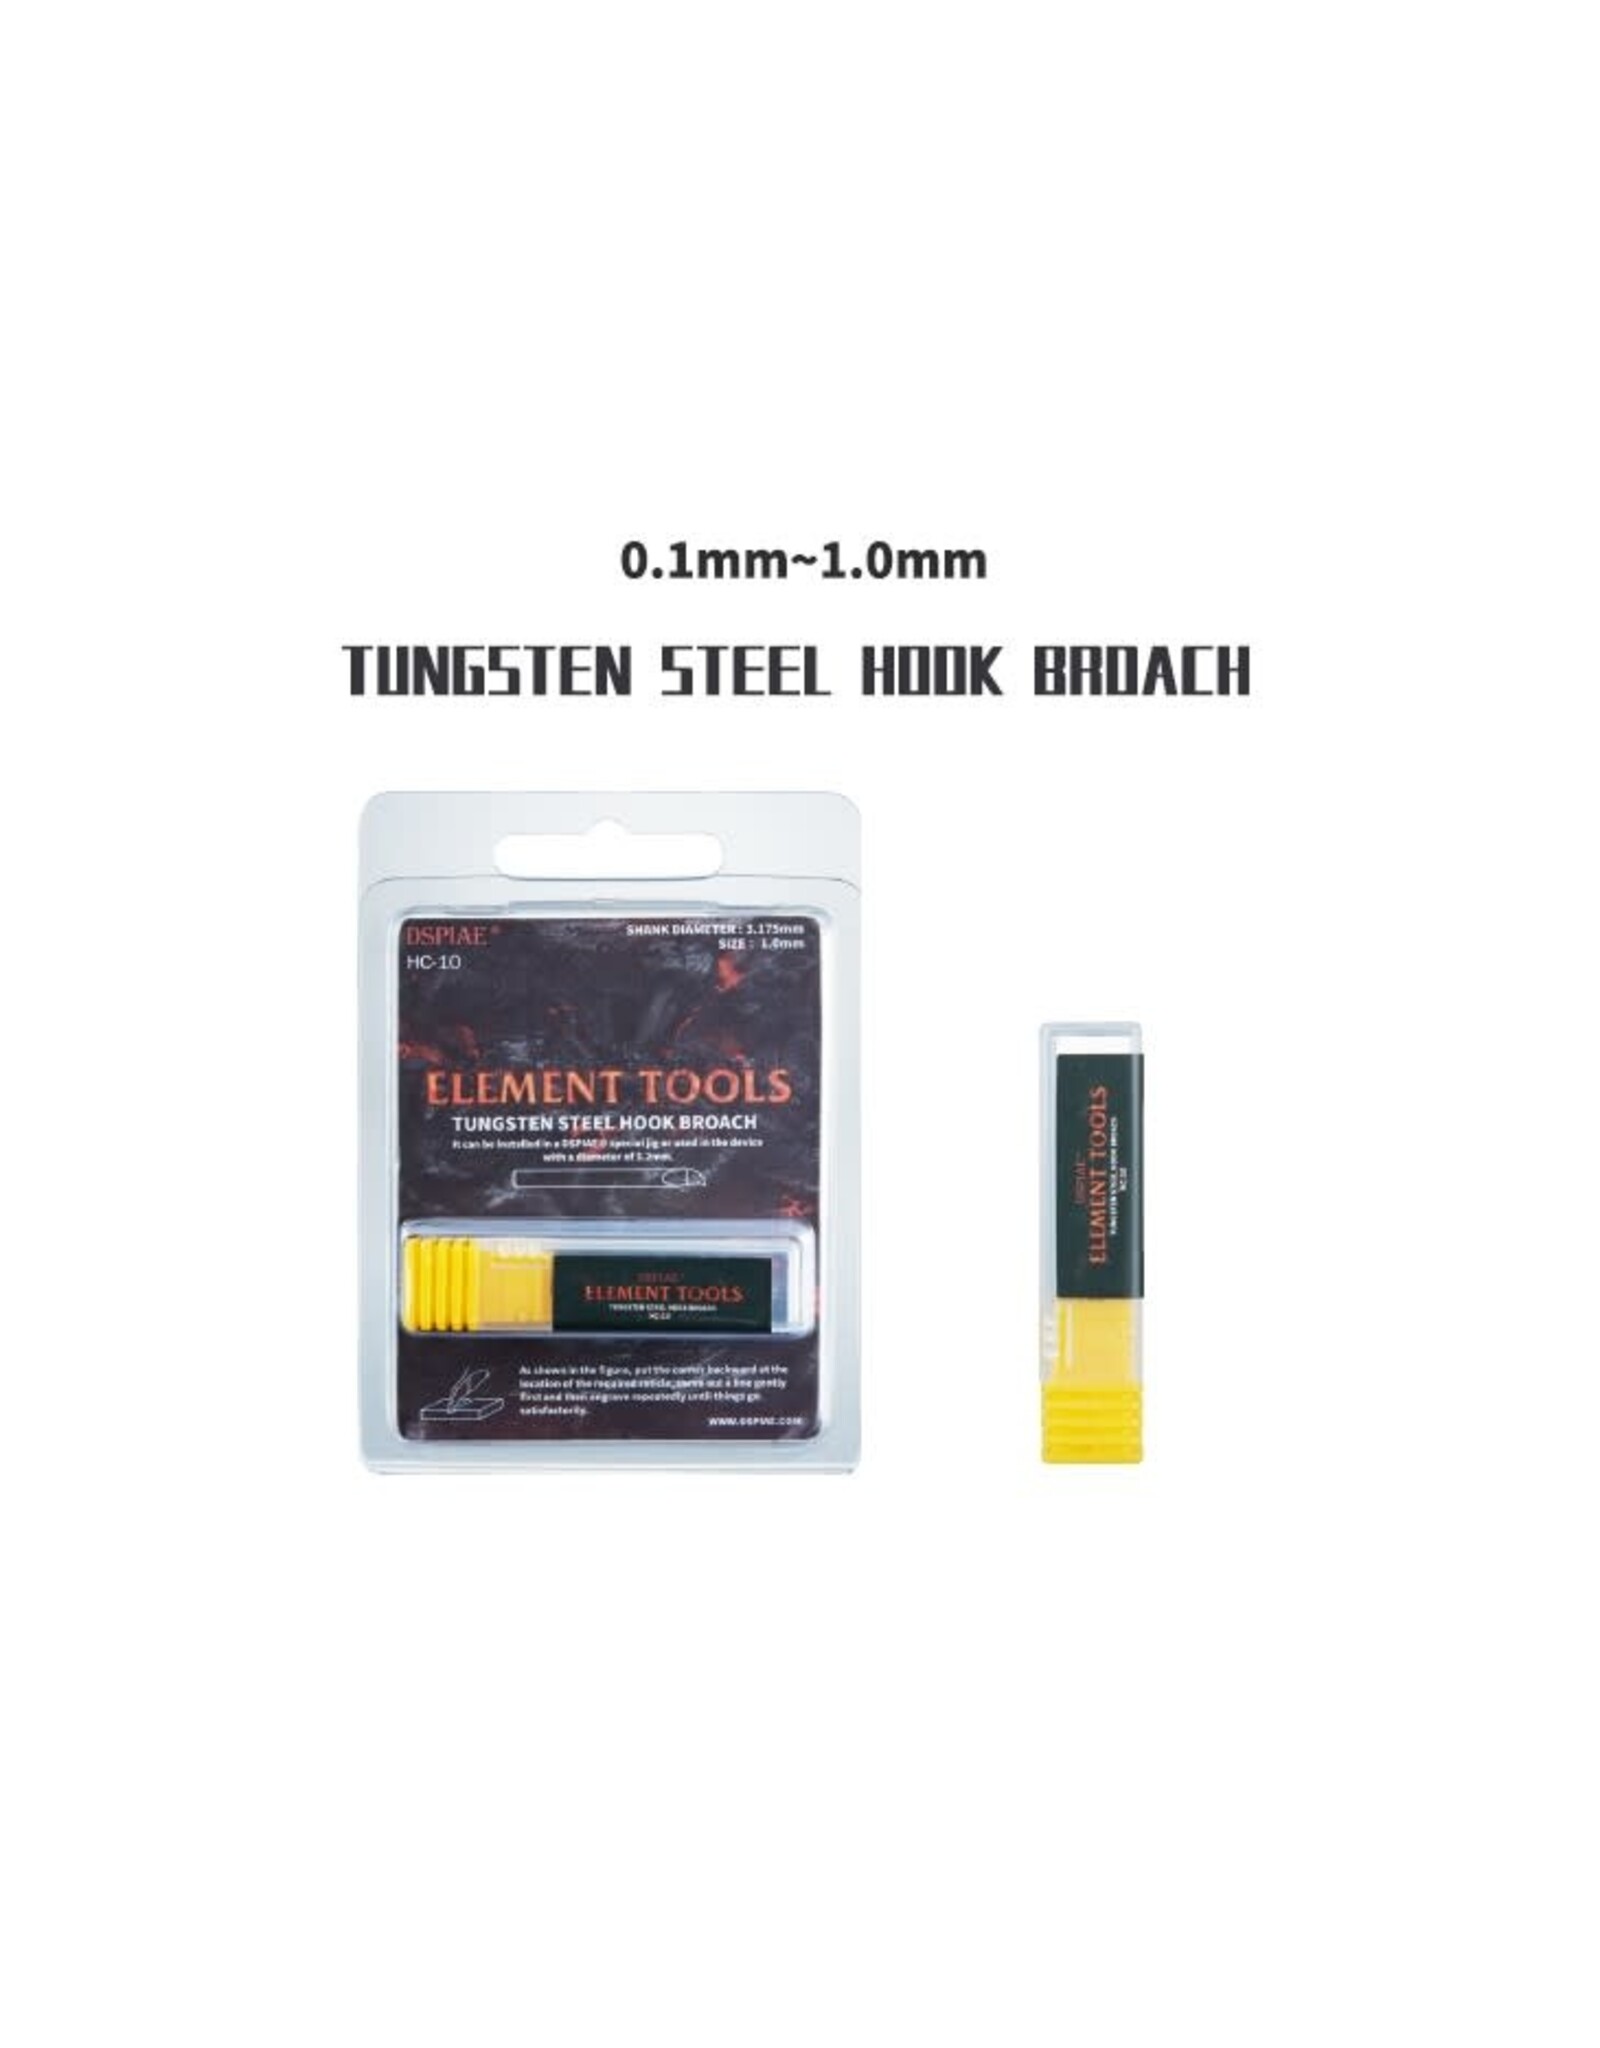 DSPIAE 0.5MM Tungsten Steel Hook Broach Chisel